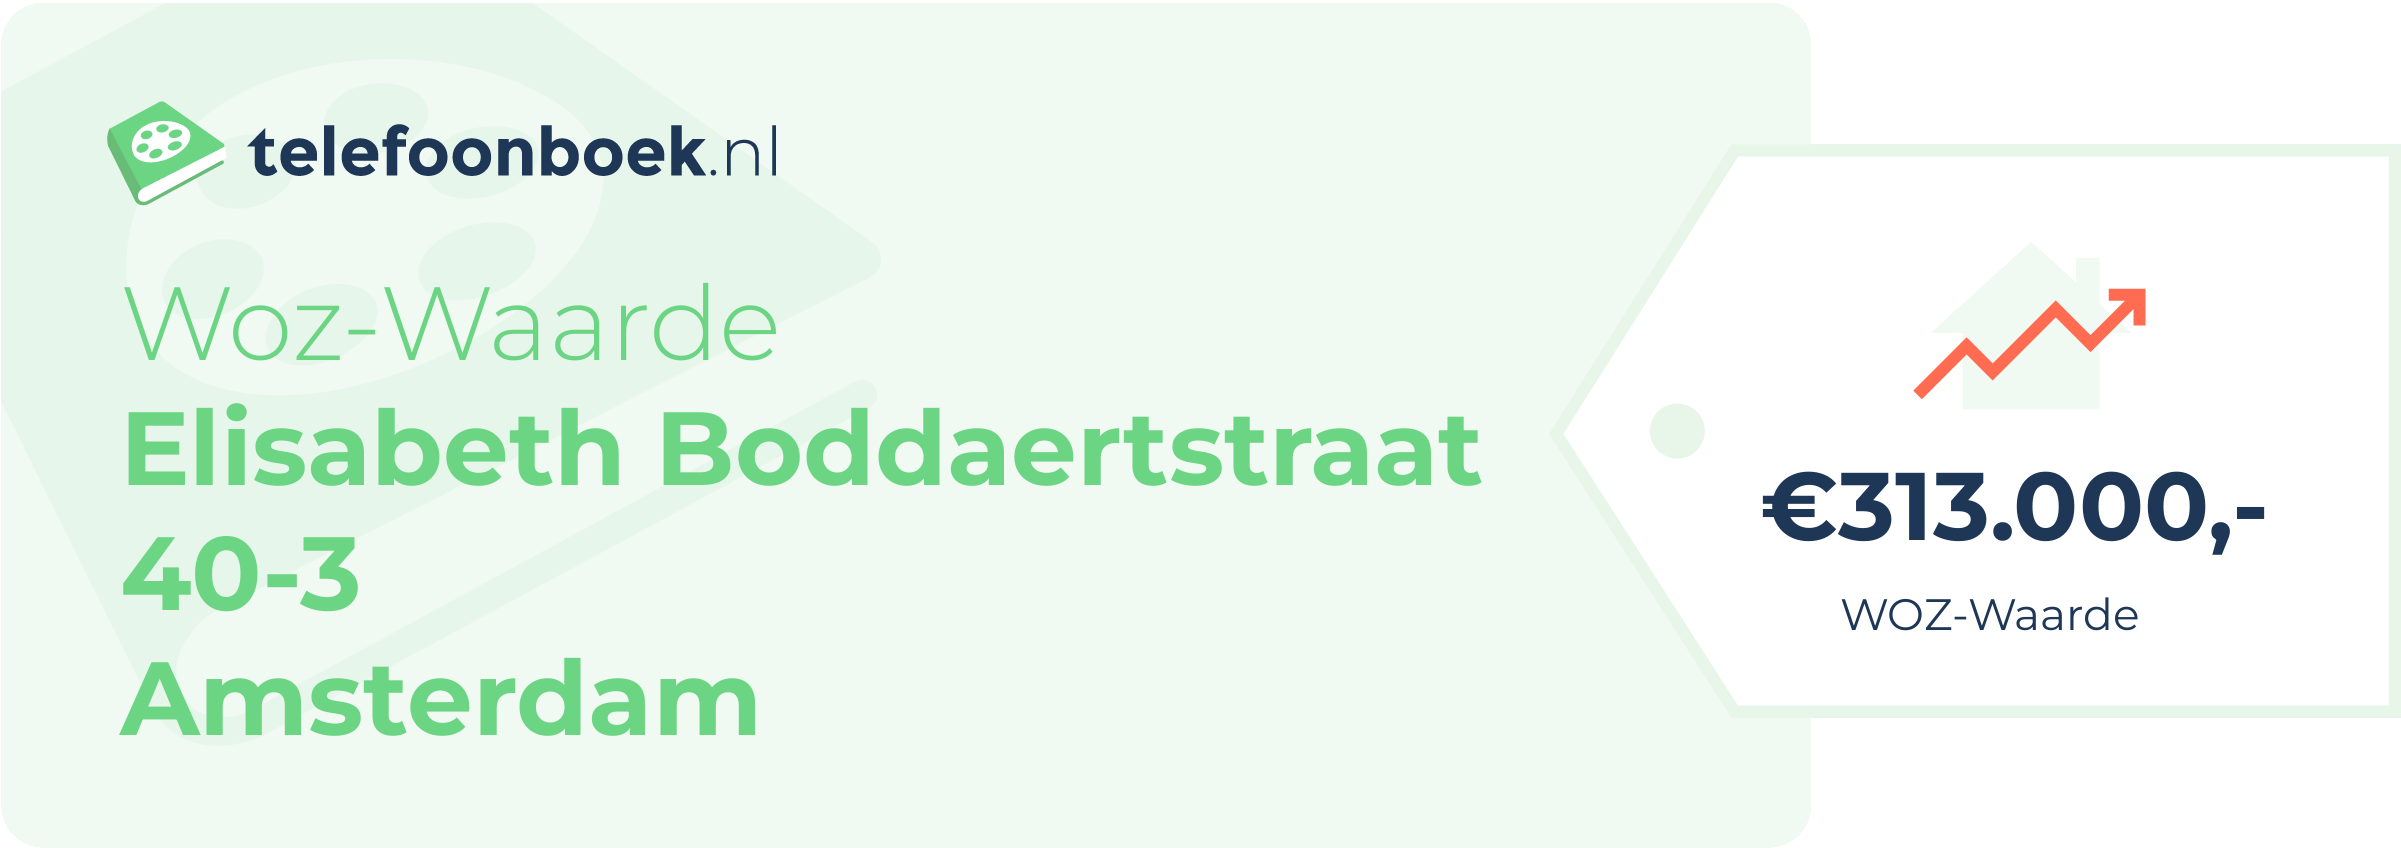 WOZ-waarde Elisabeth Boddaertstraat 40-3 Amsterdam